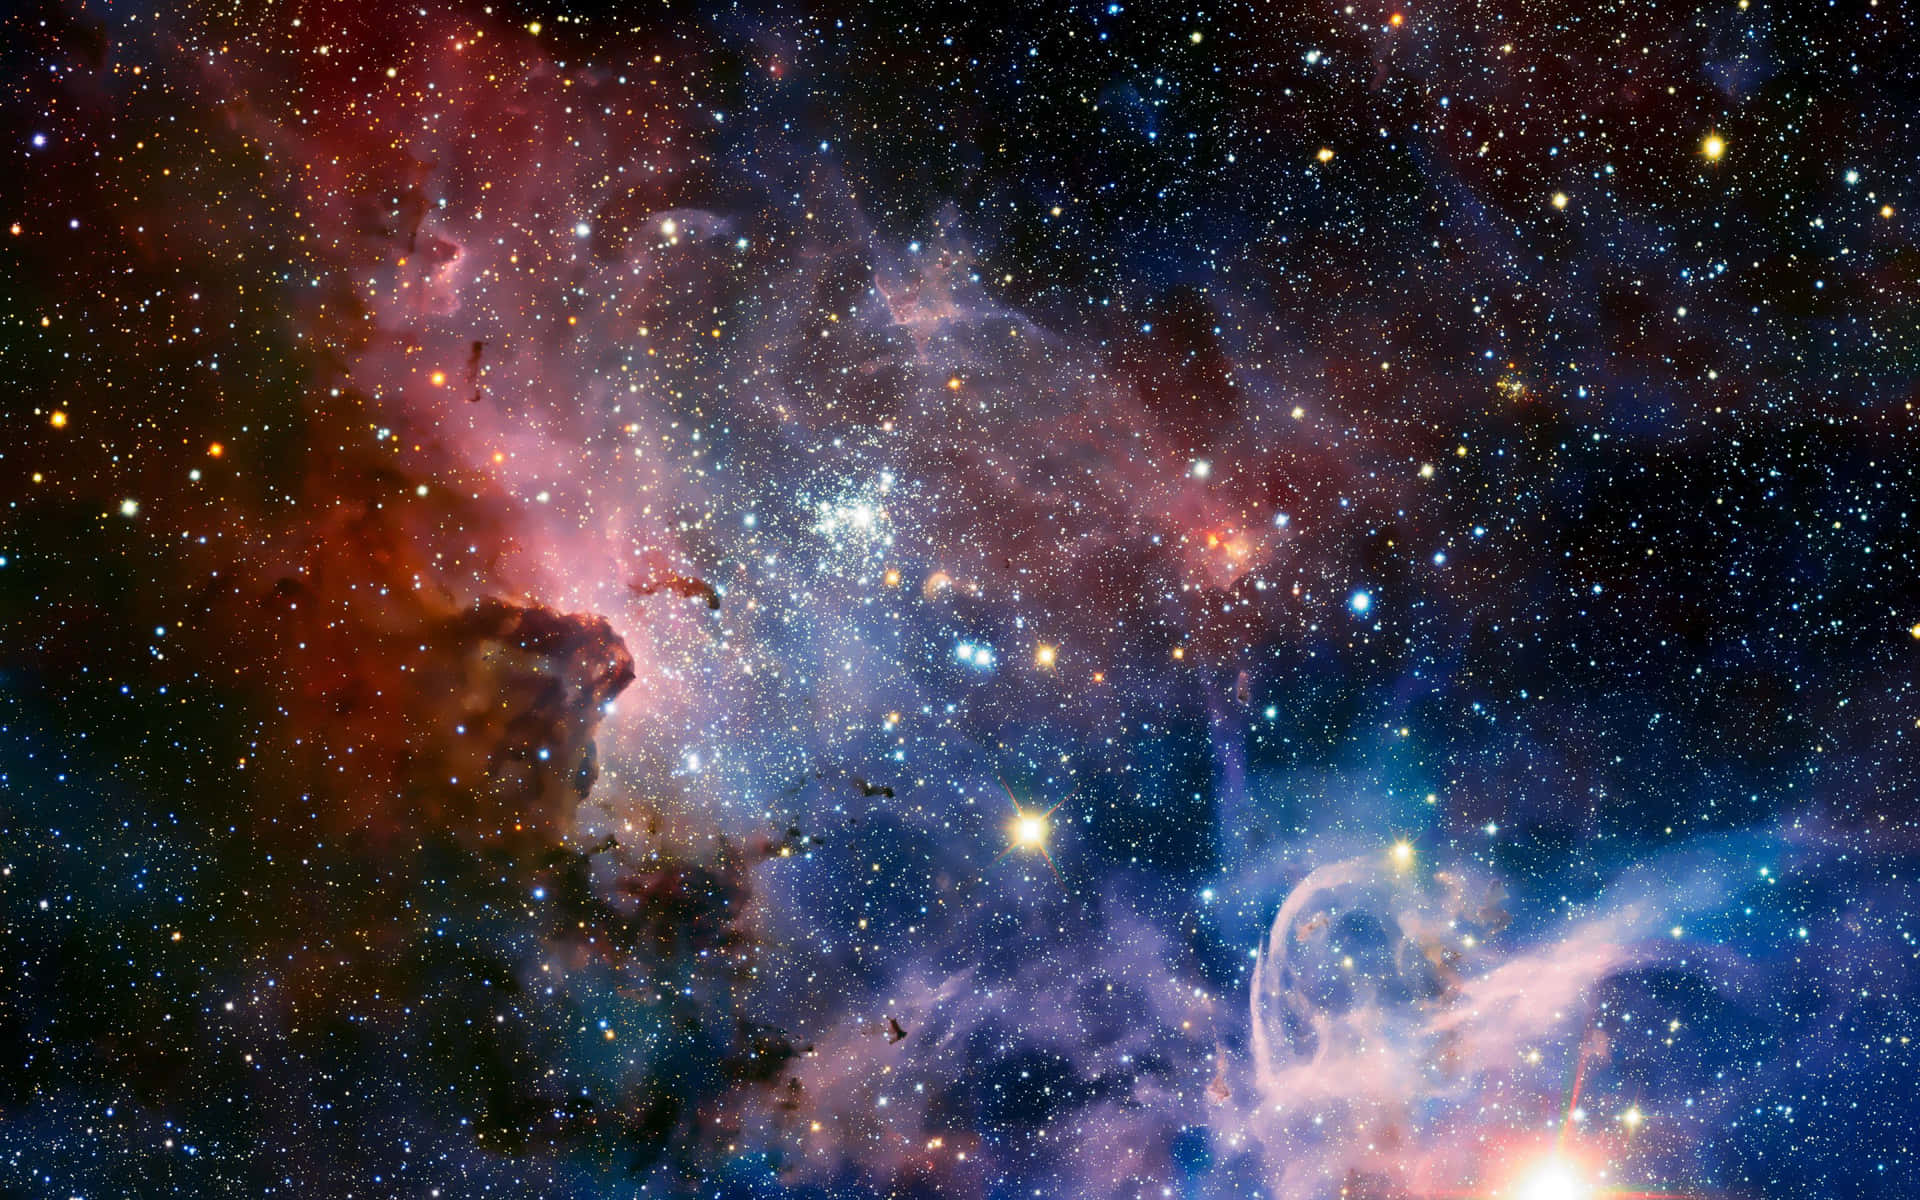 A View Of The Nebula With Stars And Nebula